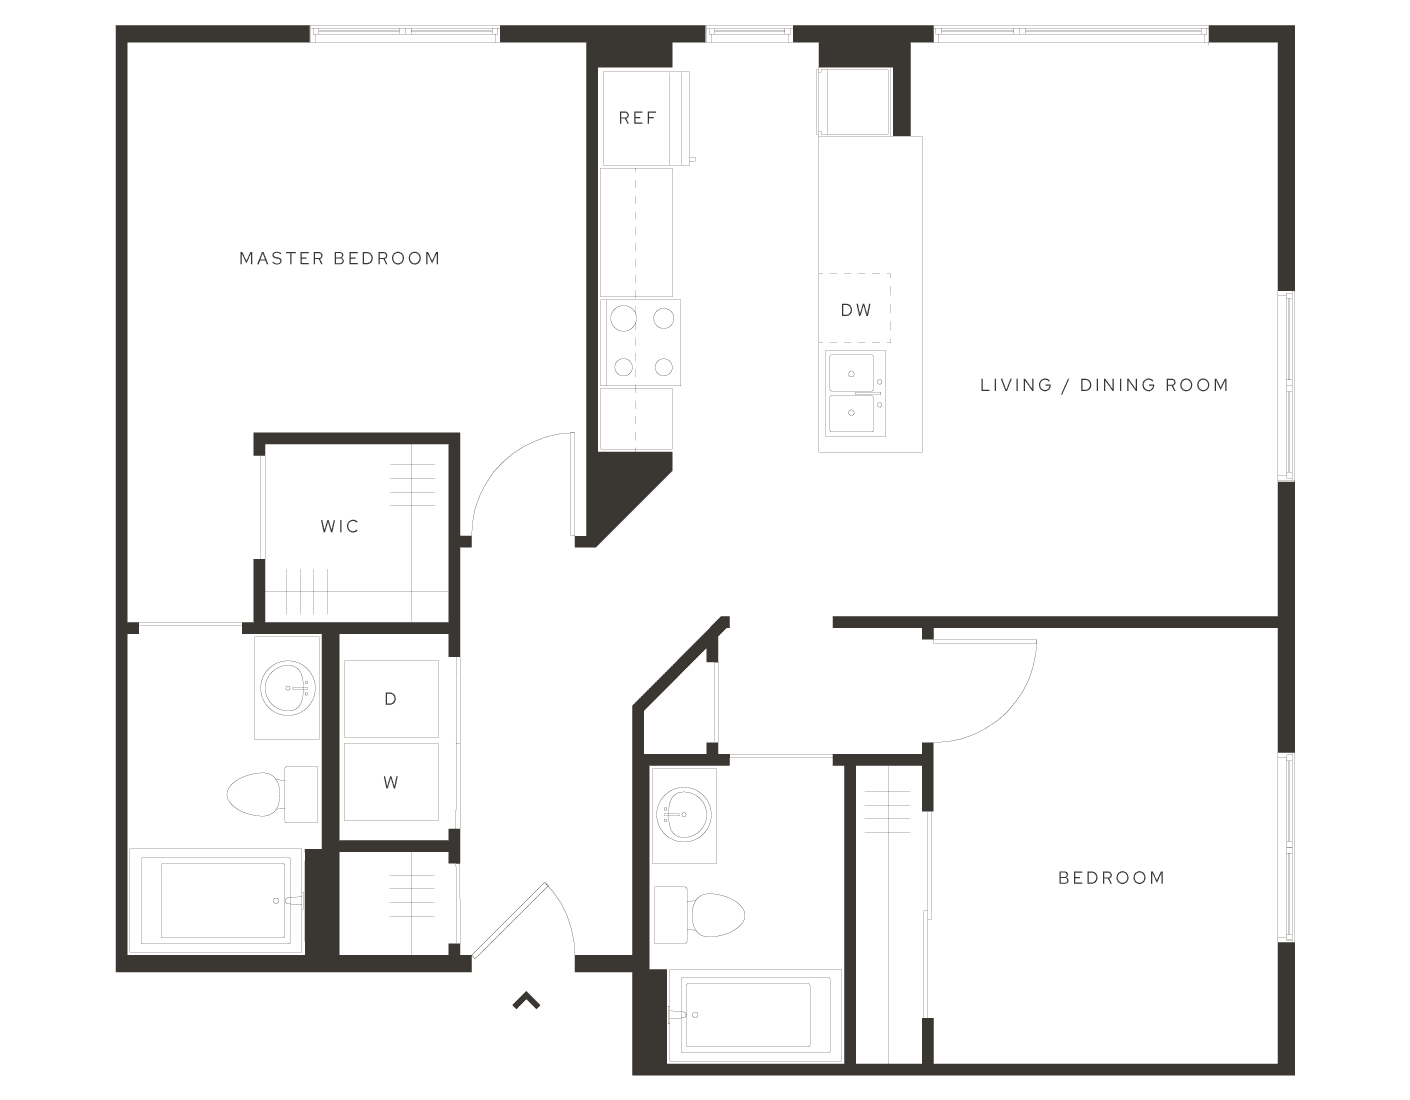 Avia apartment building in Salt Lake City offers 2-bedroom luxury floor plan